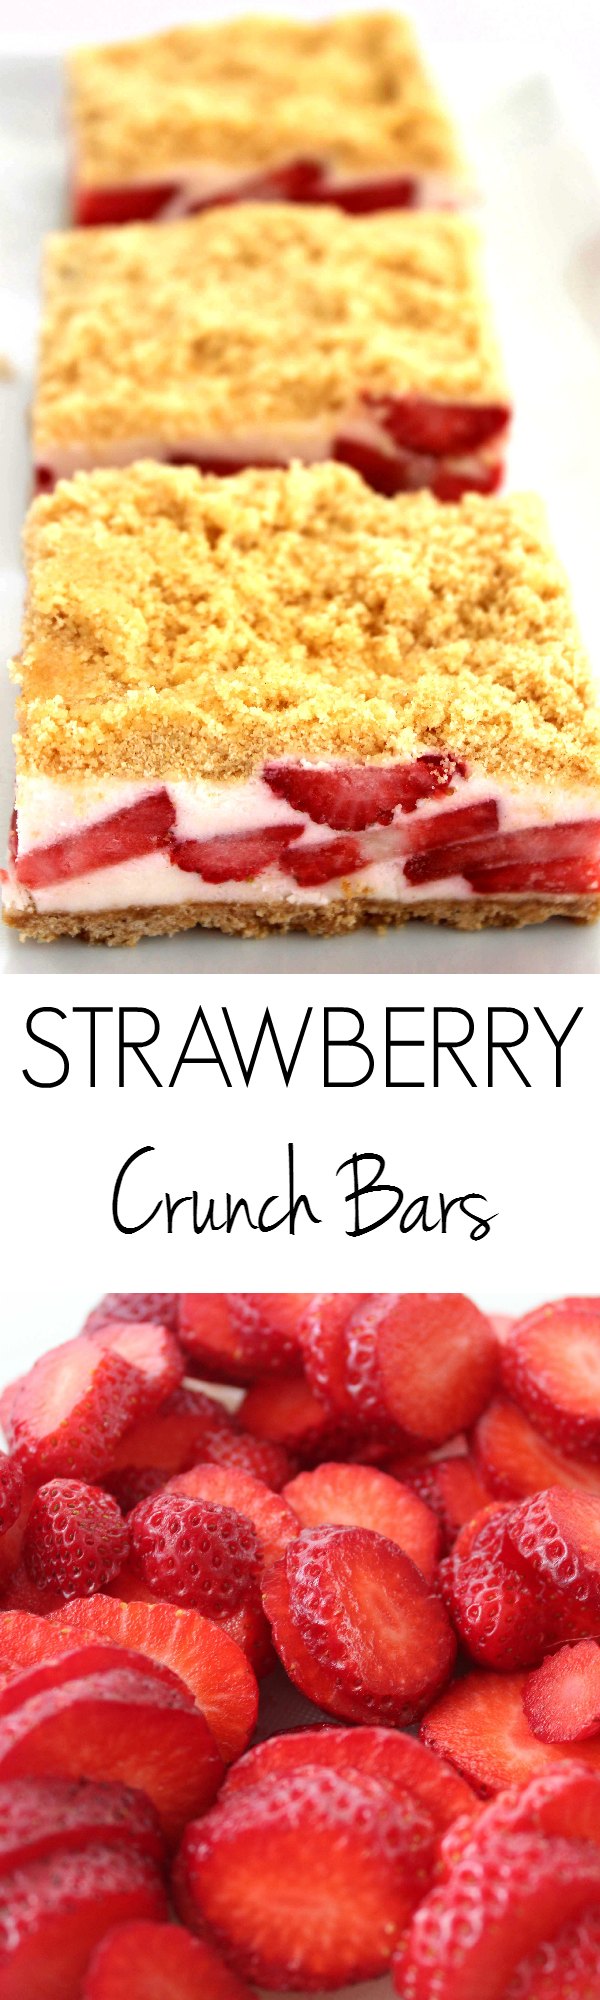 Strawberry Crunch Bars Recipe